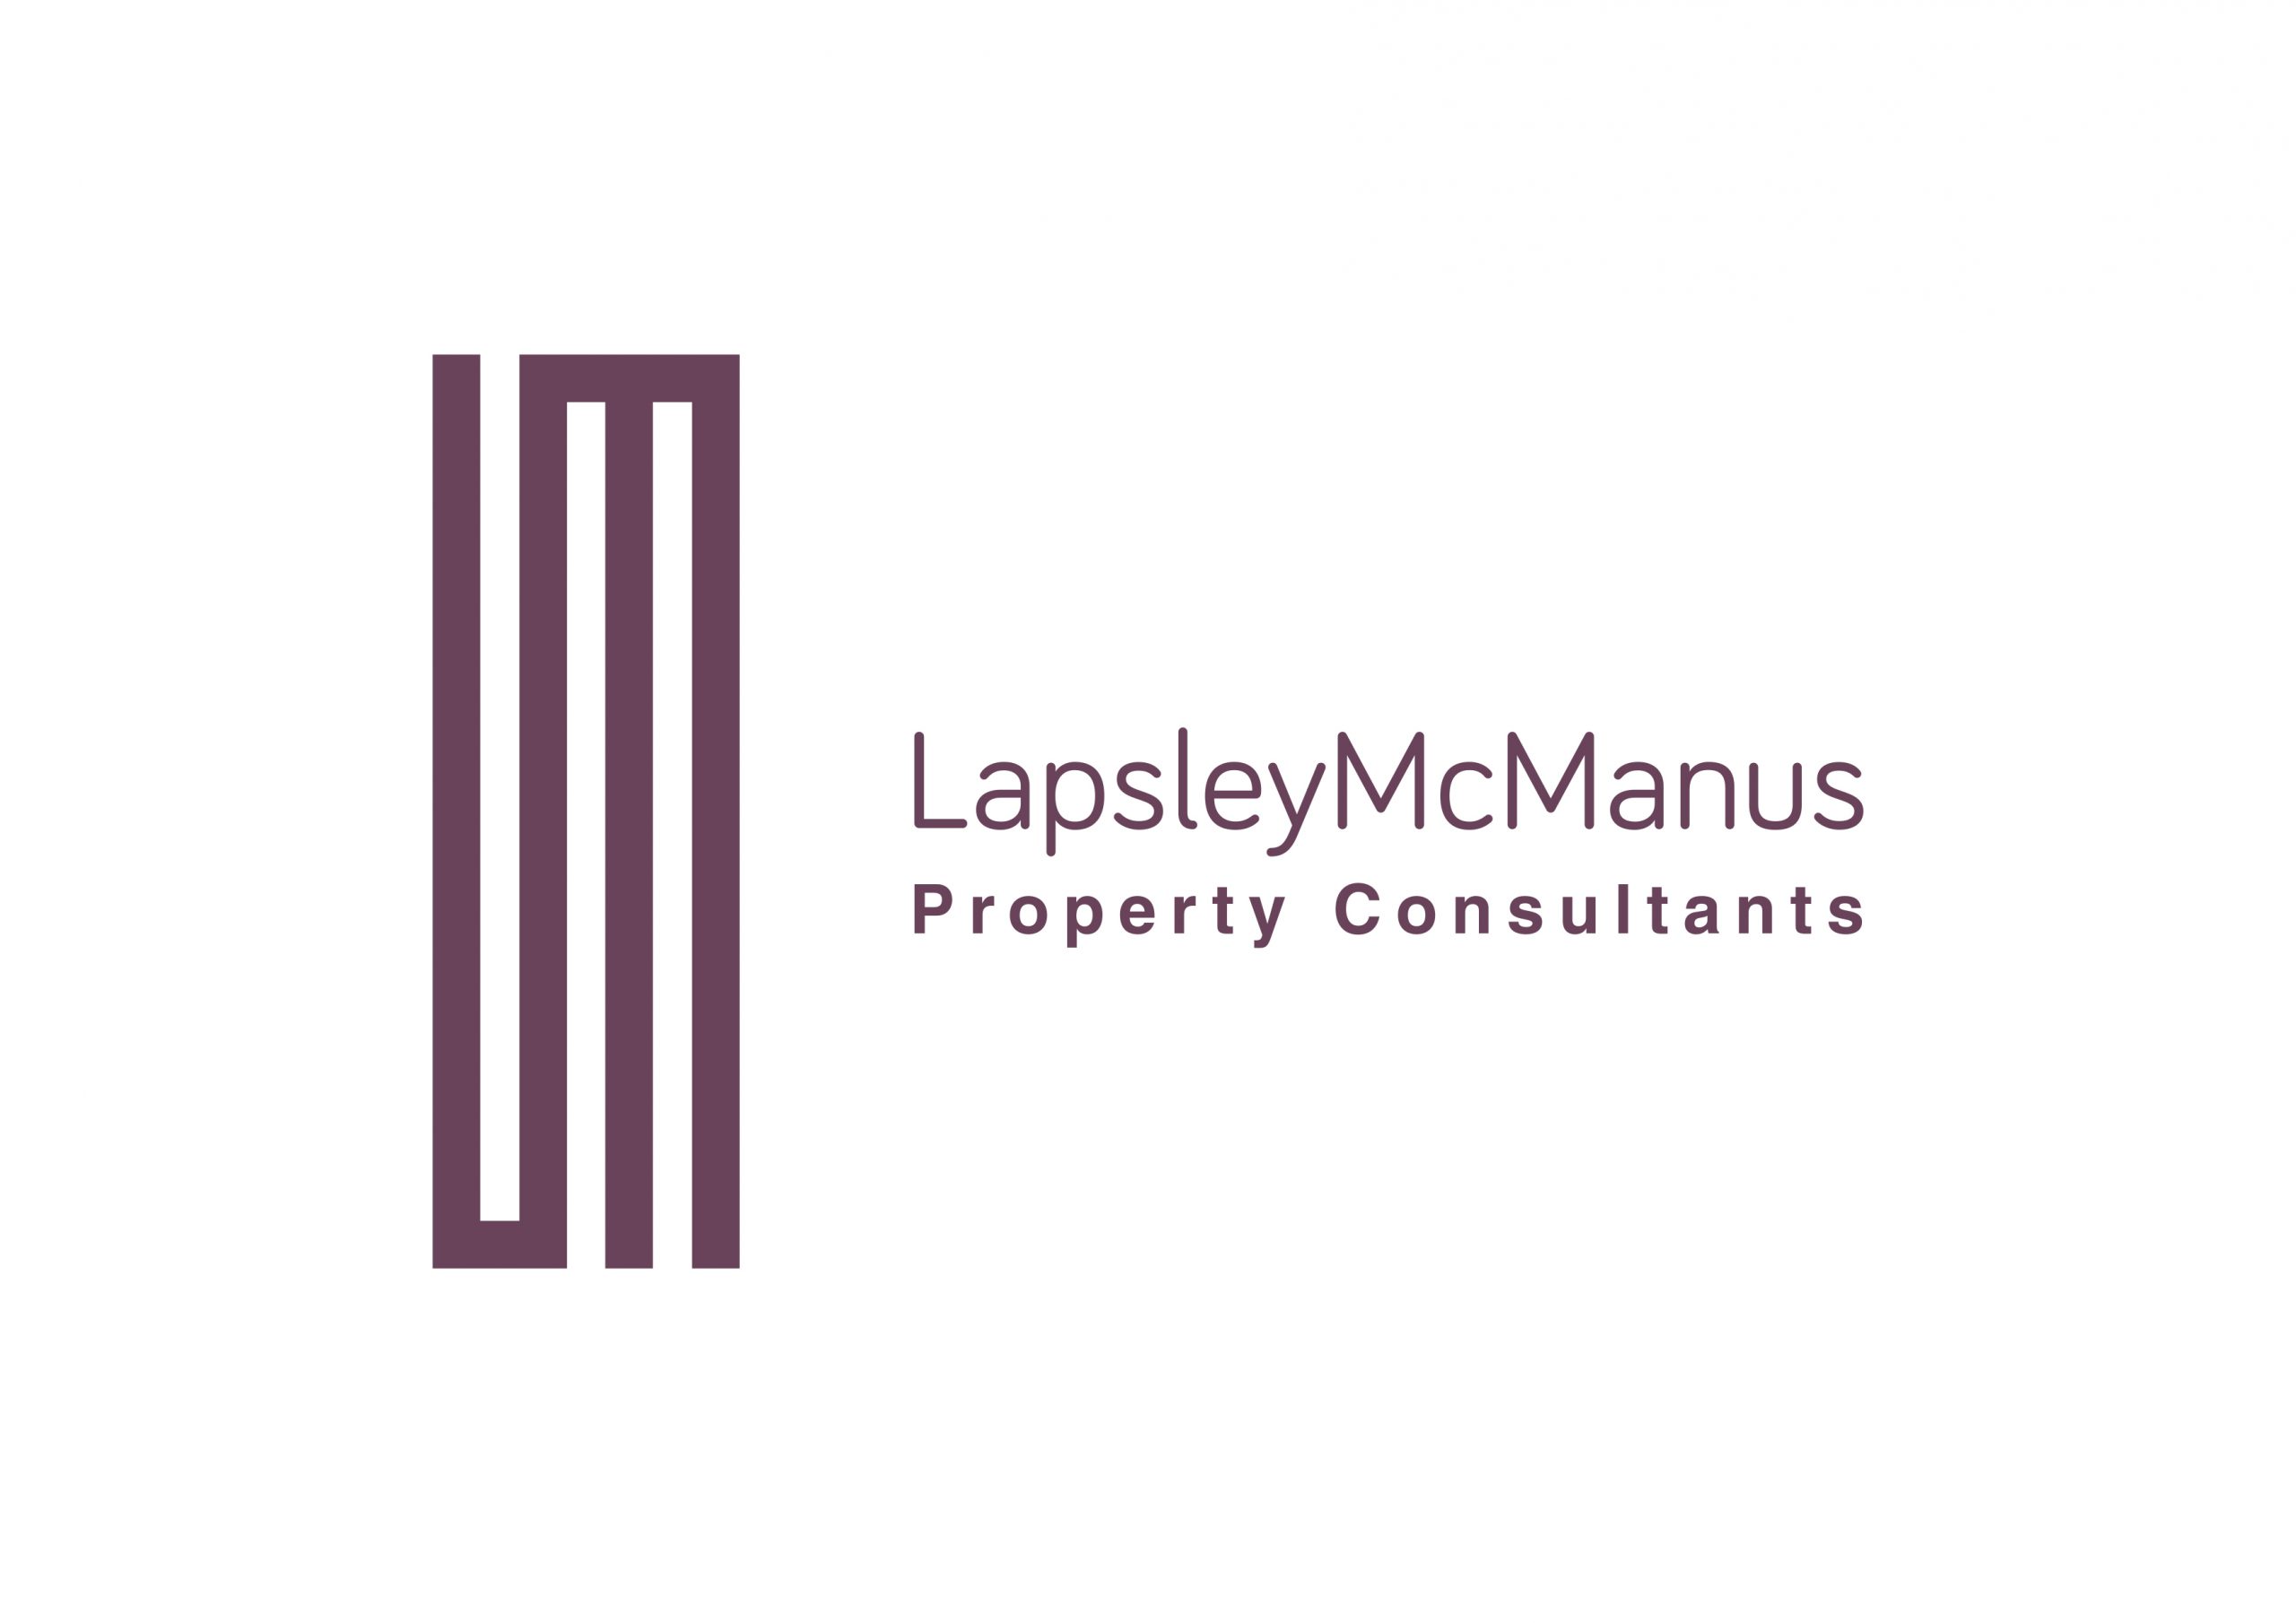 Lapsley McManus's logo